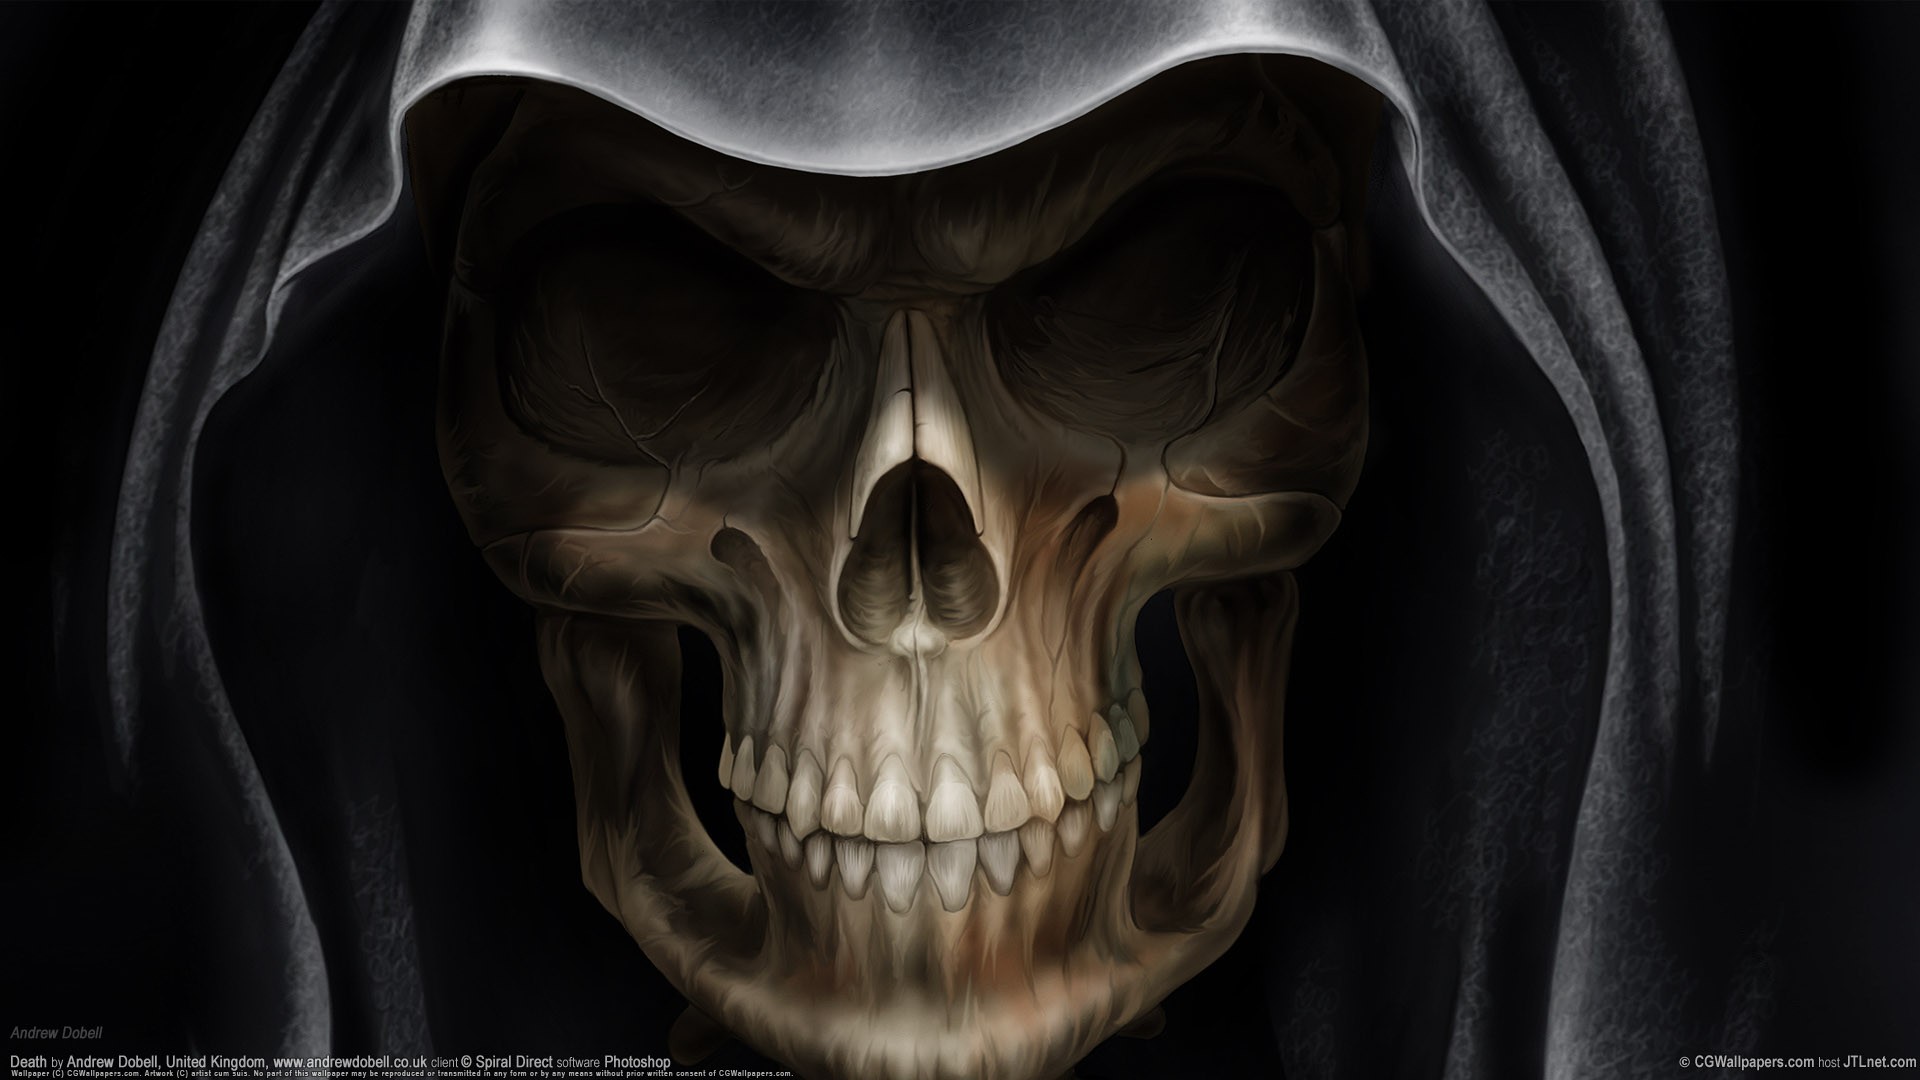 General 1920x1080 death spooky Grim Reaper skull fantasy art digital art hoods